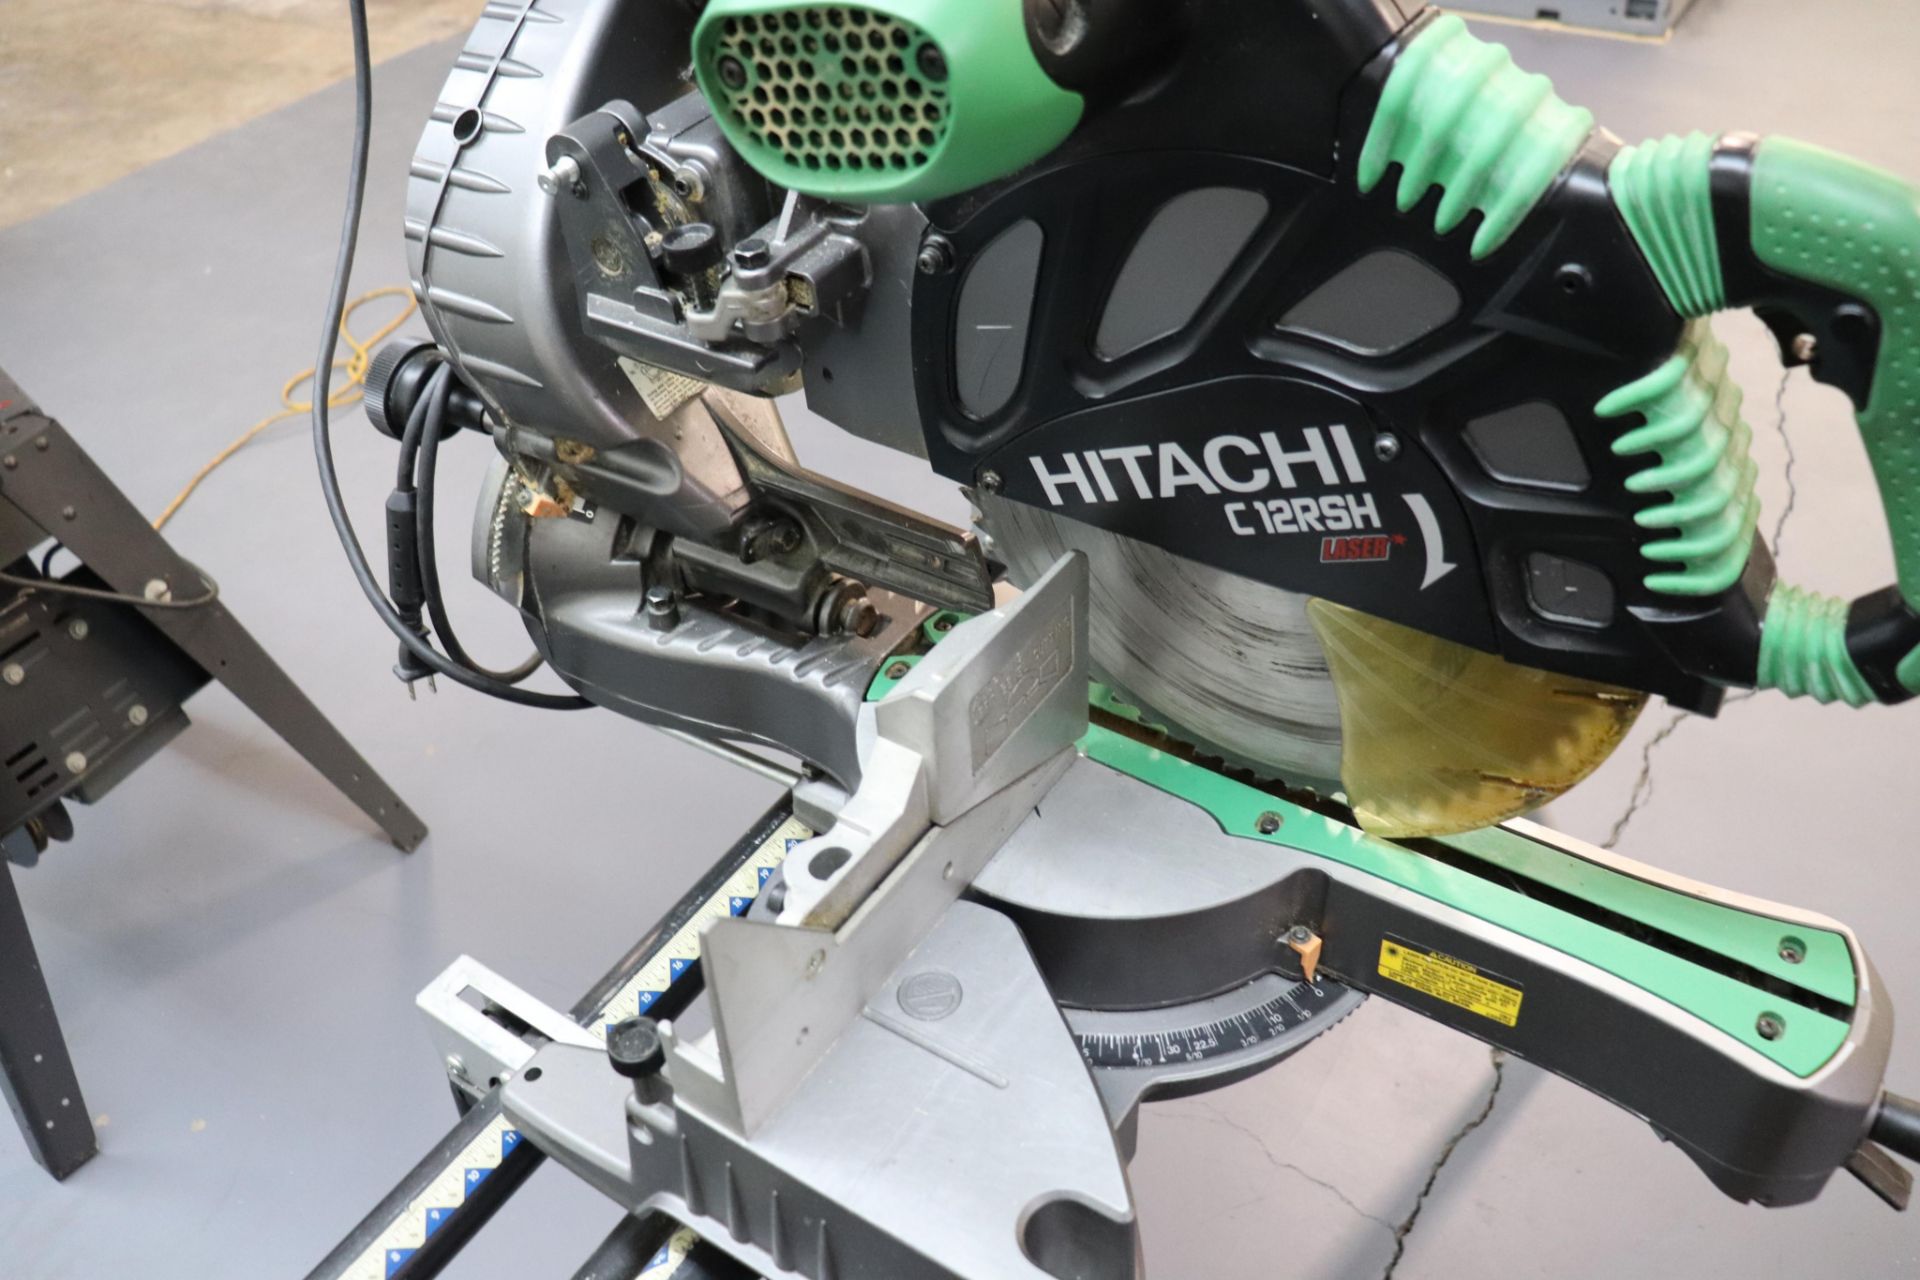 Hitachi C 12RSH 12" compound sliding miter saw - Image 3 of 4